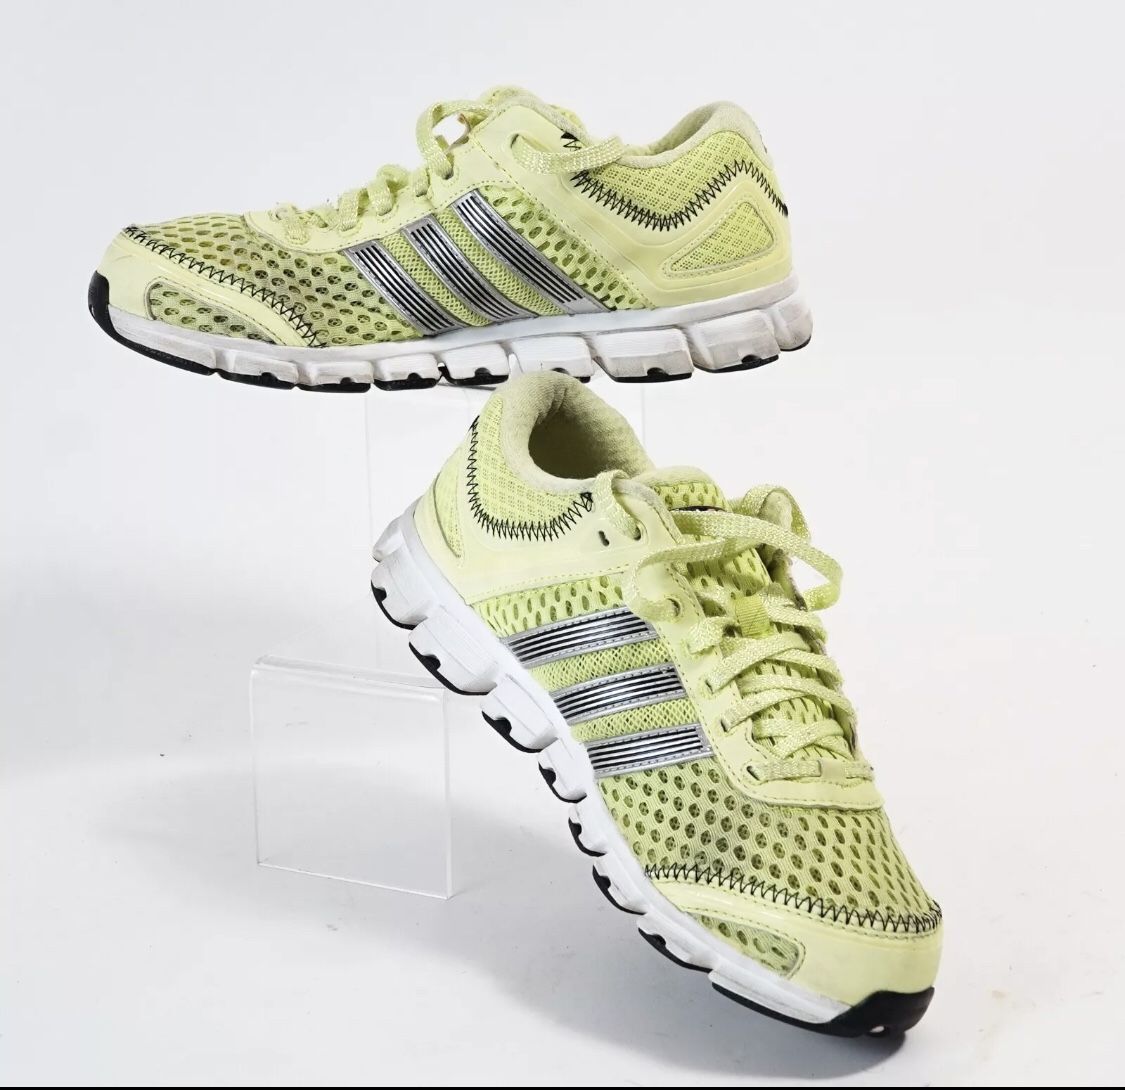 Adidas Climacool Revent Neon Green/Yellow Women's Running Shoe Size 6.5